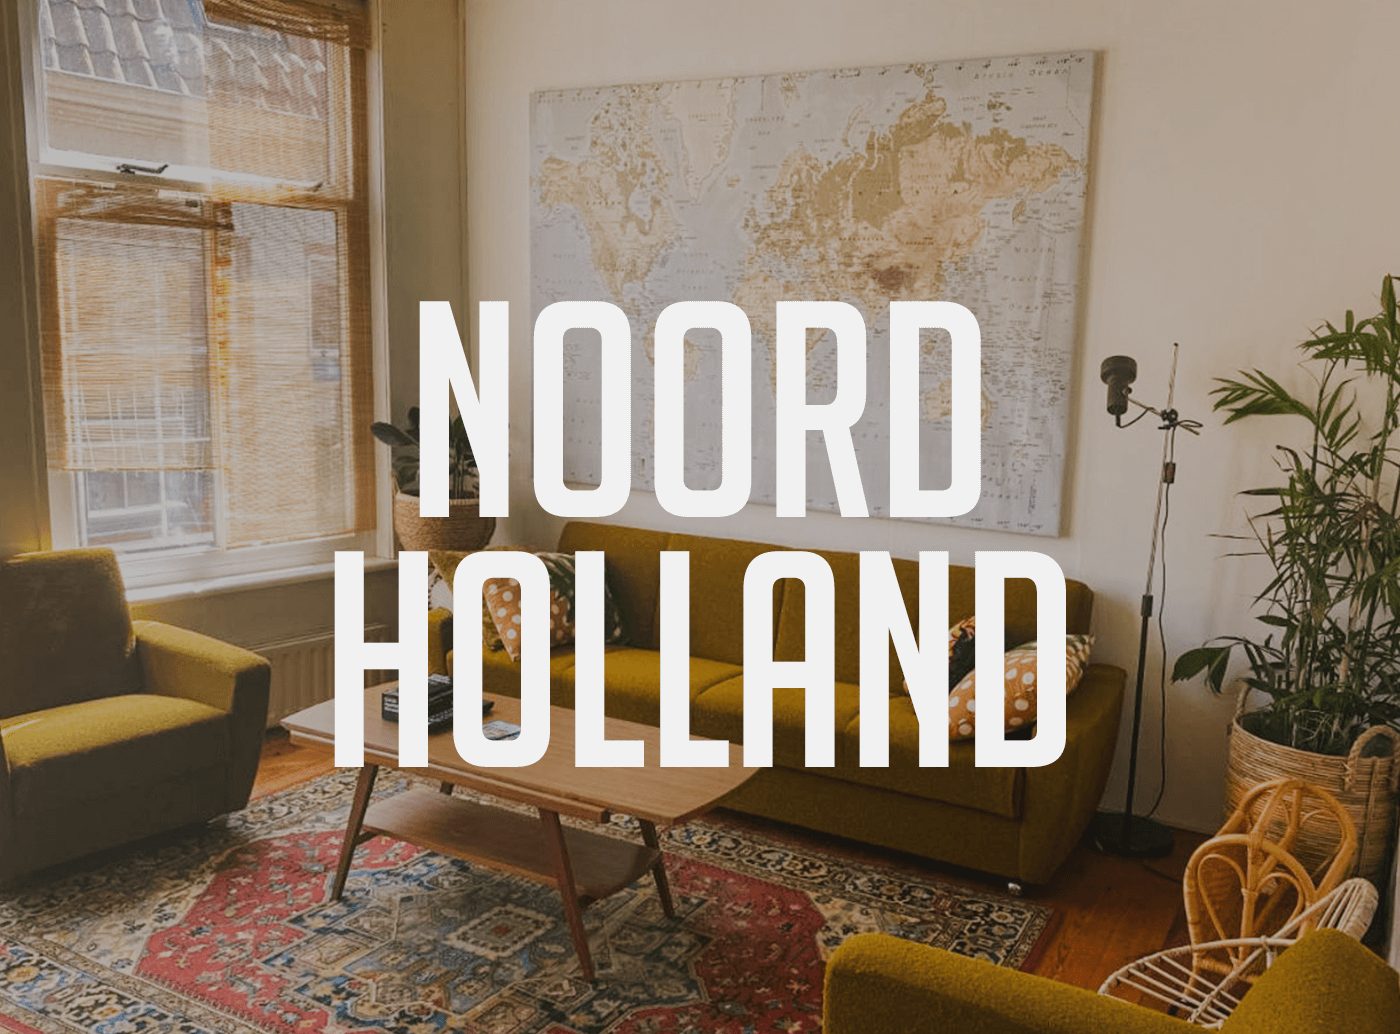 Bed and breakfast nederland noord holland